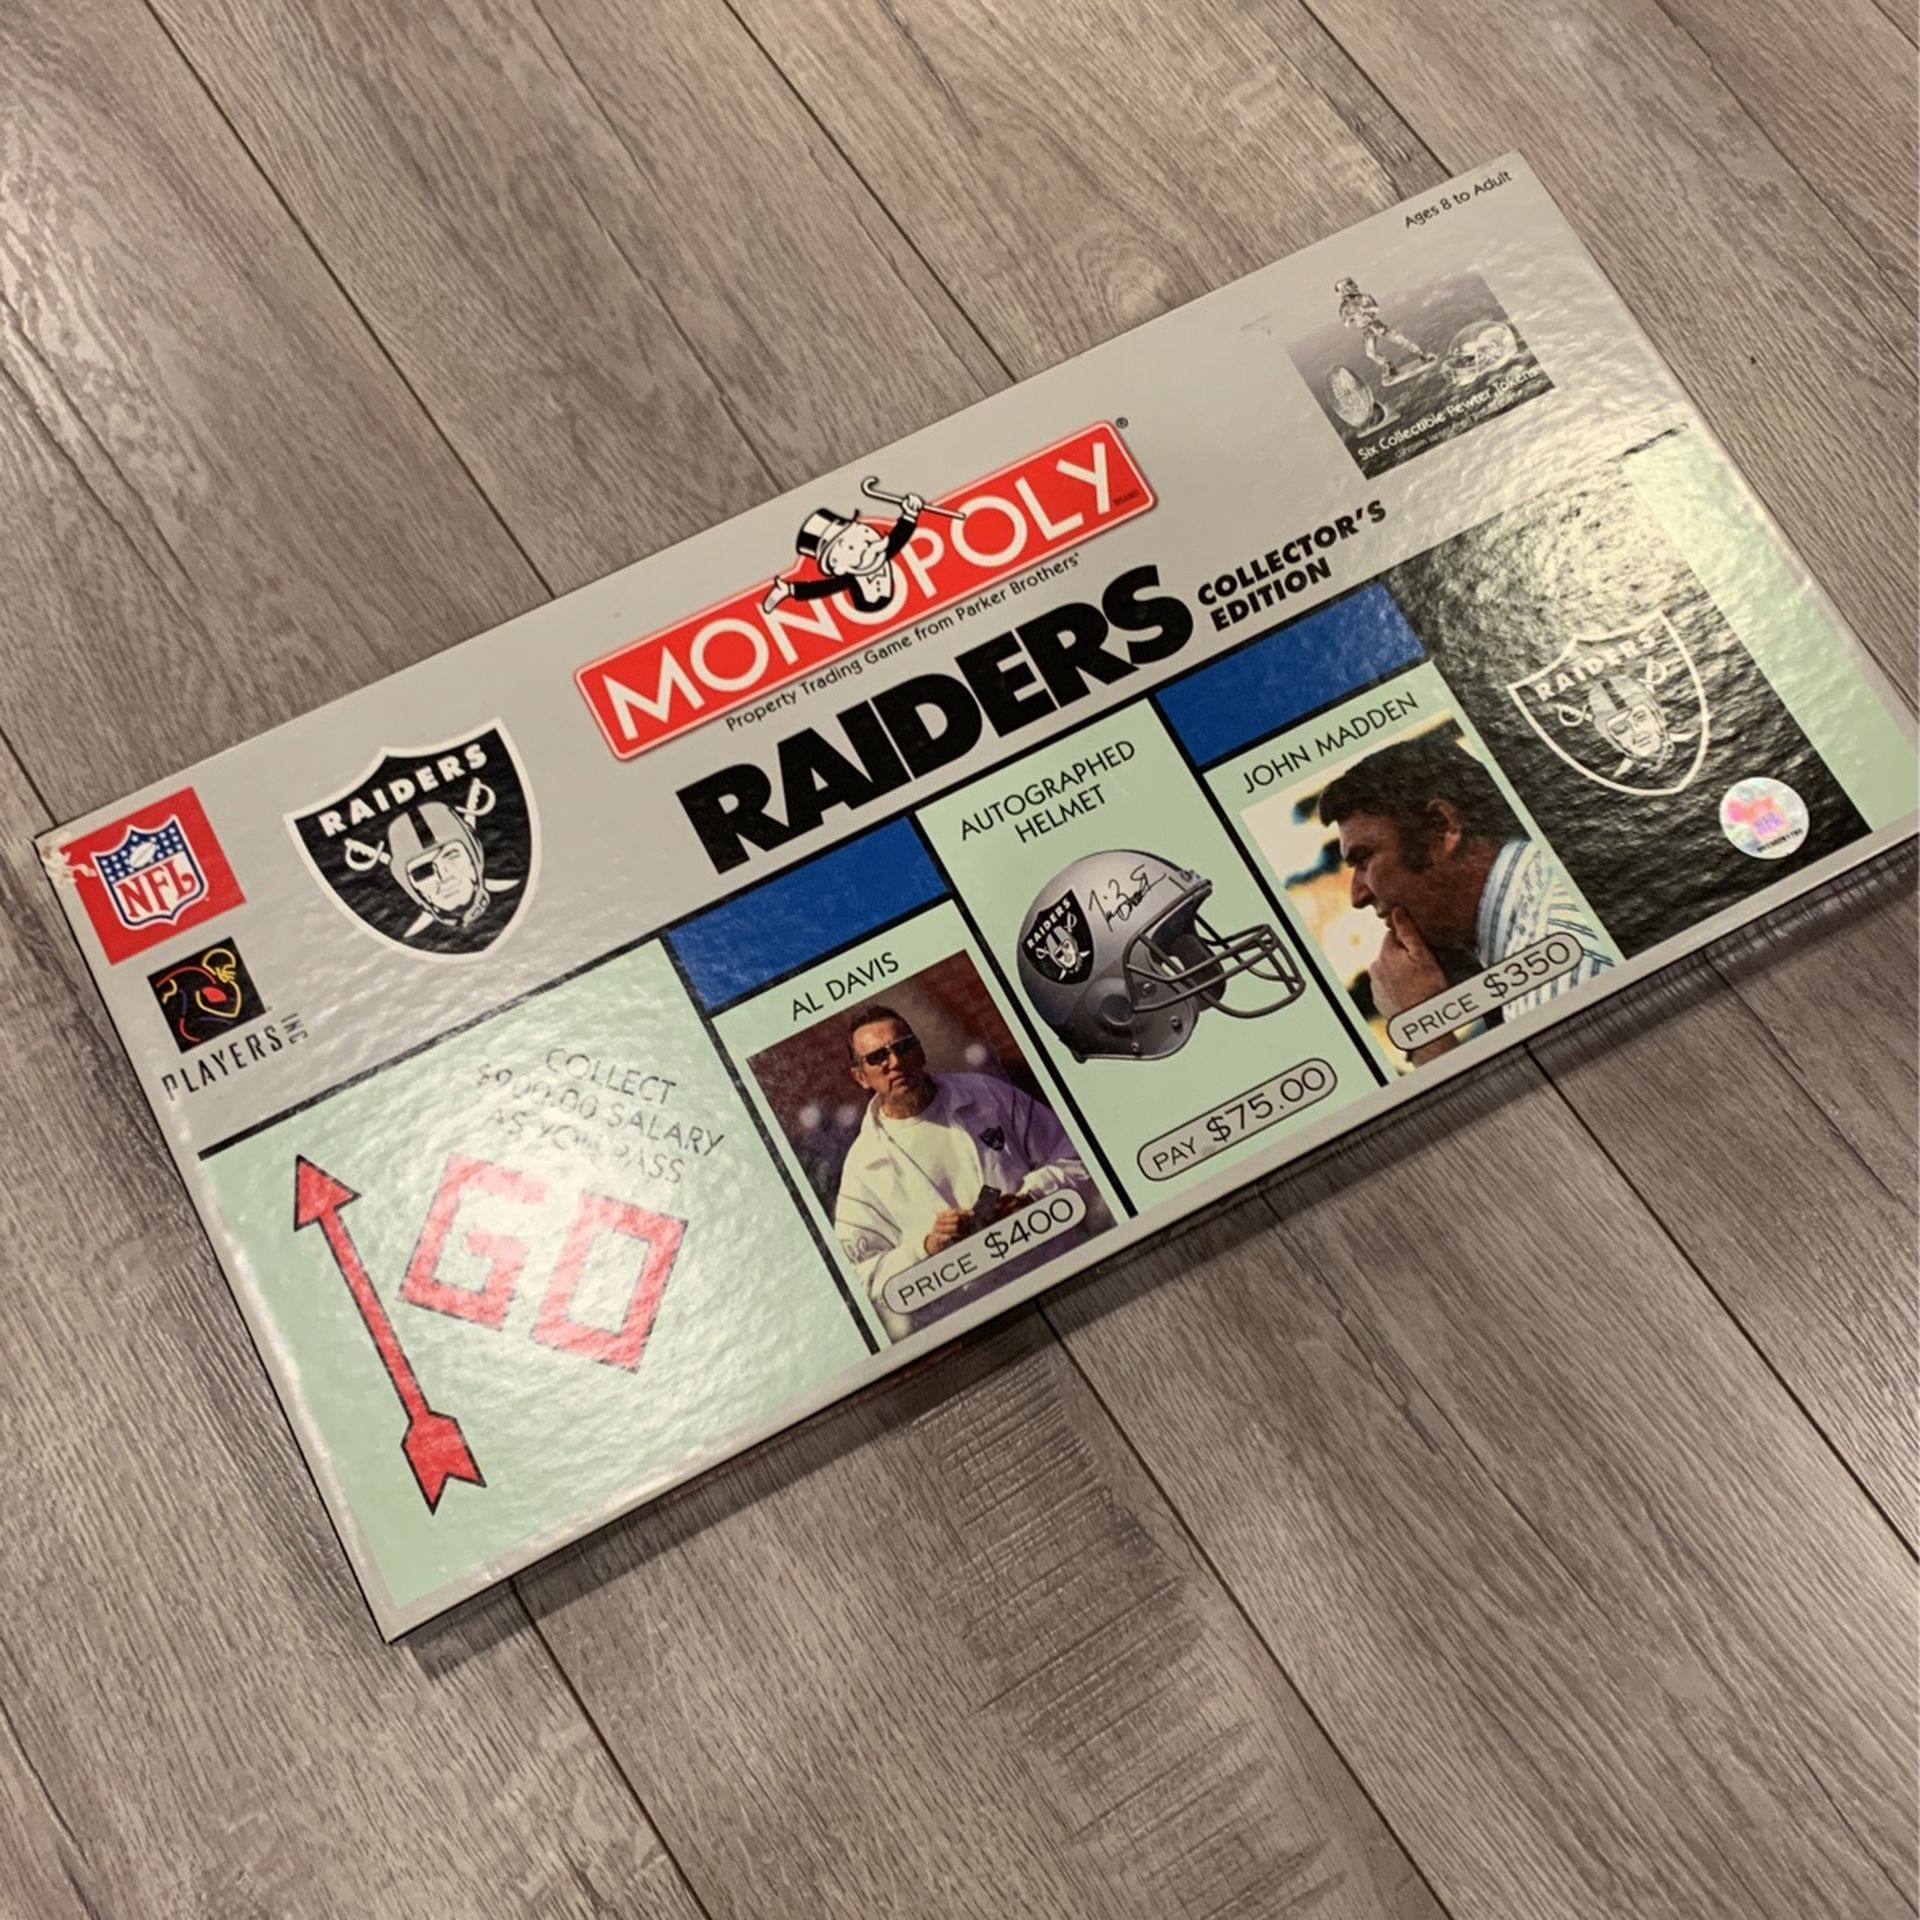 Raiders Monopoly Board Game